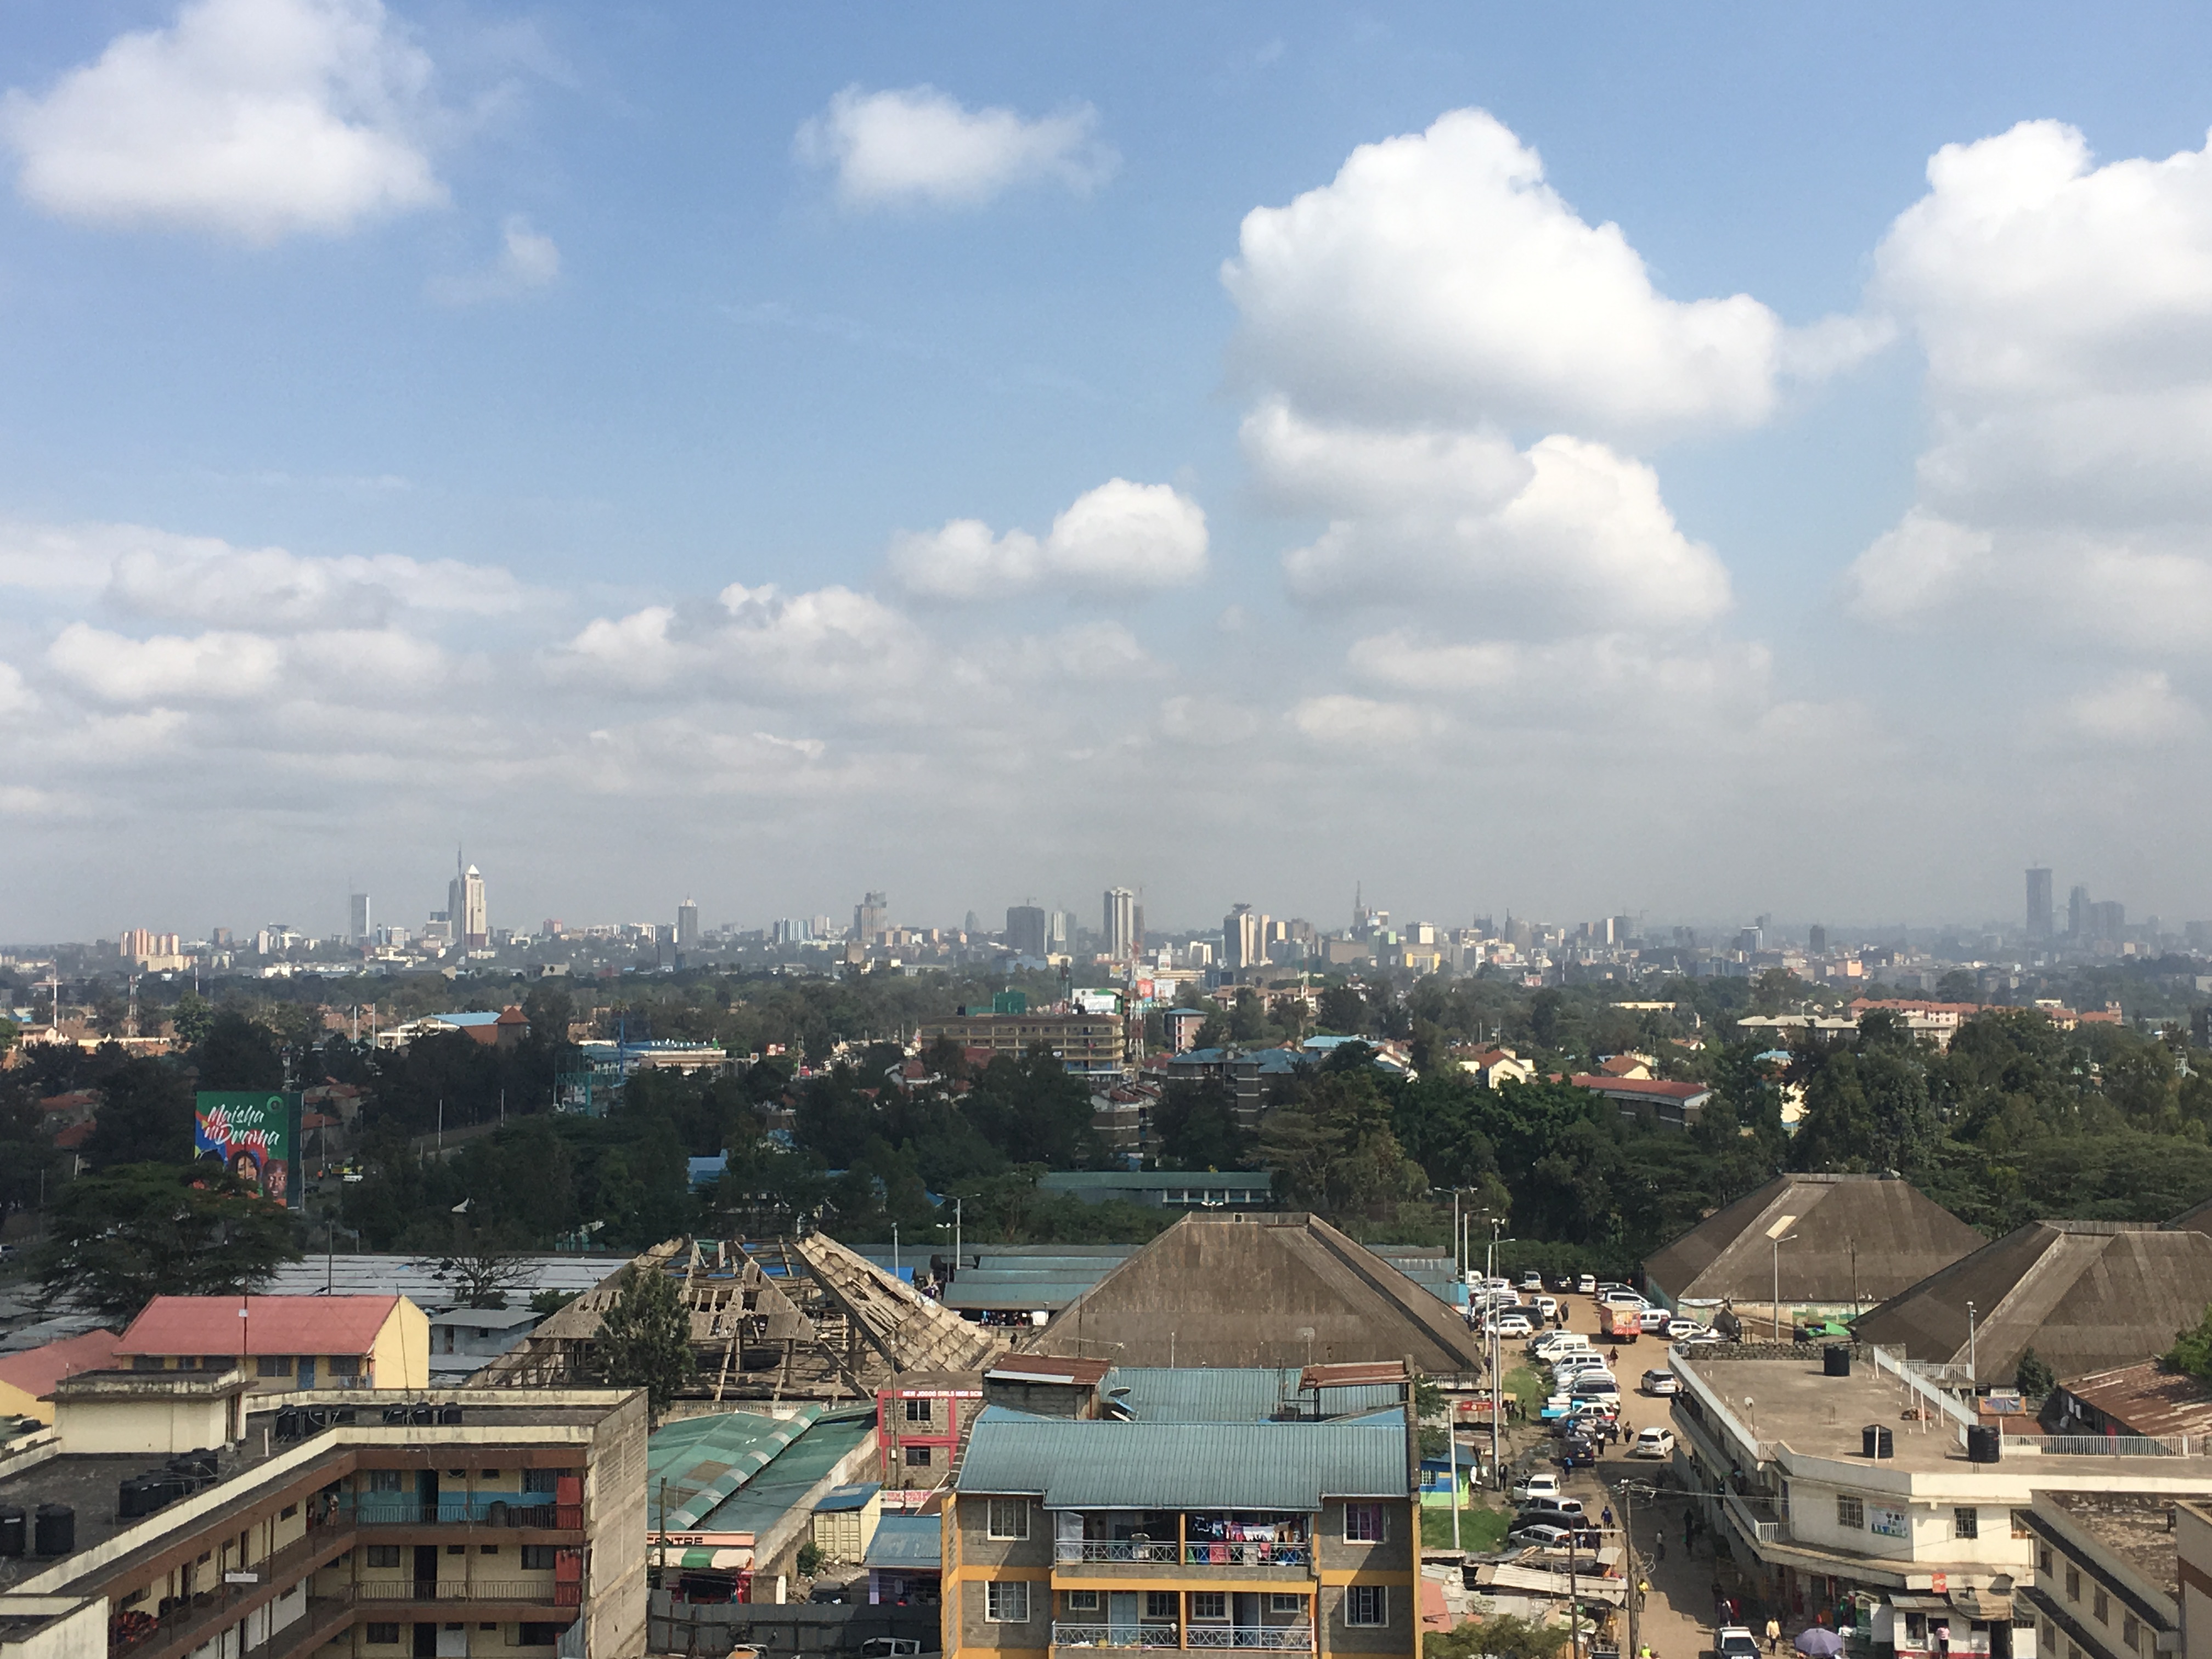 Client visit to Nairobi